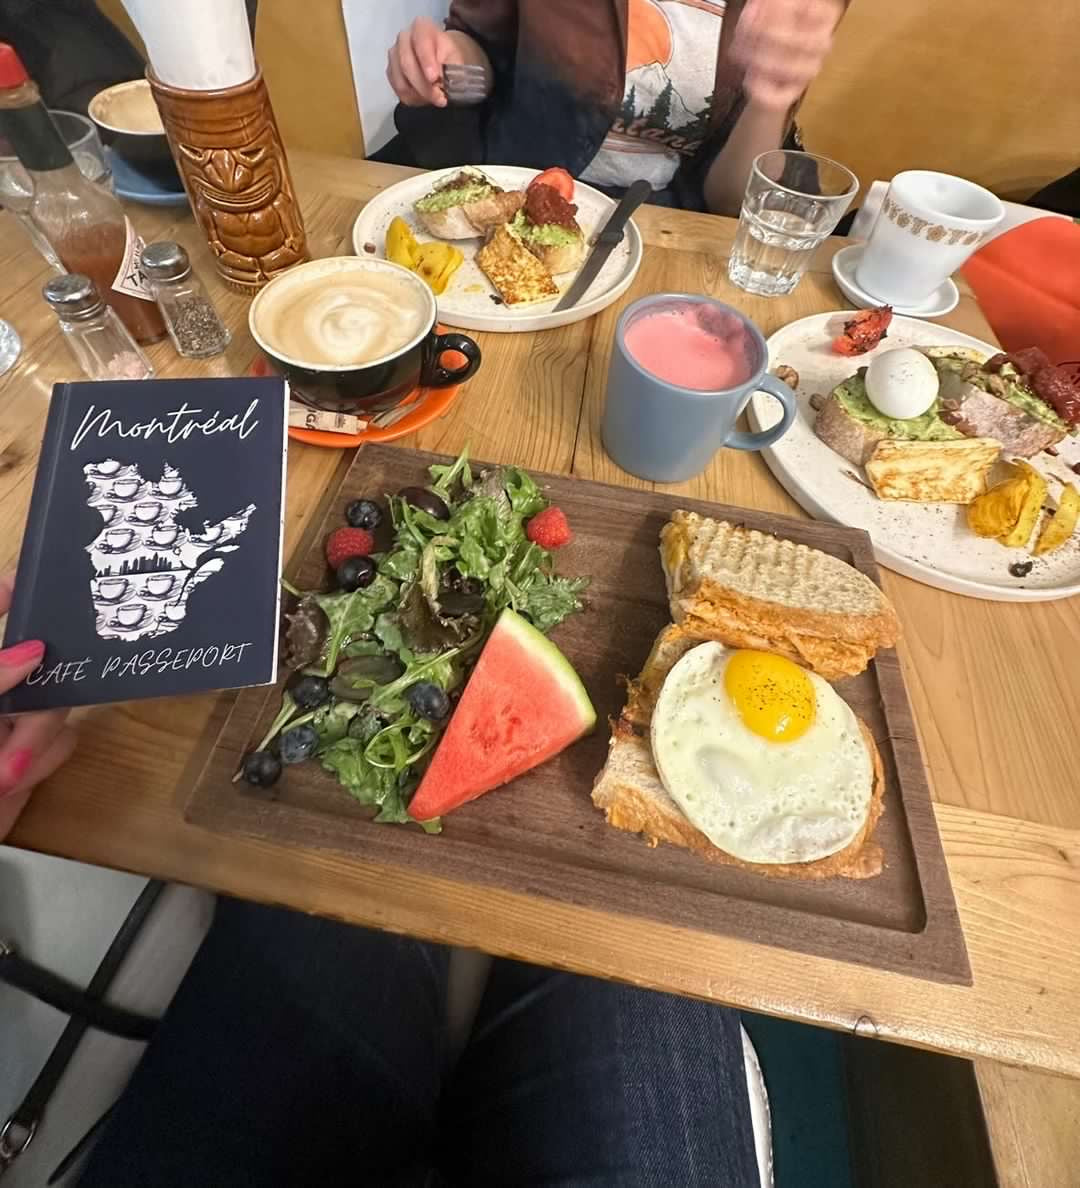 Montréal Café Passport